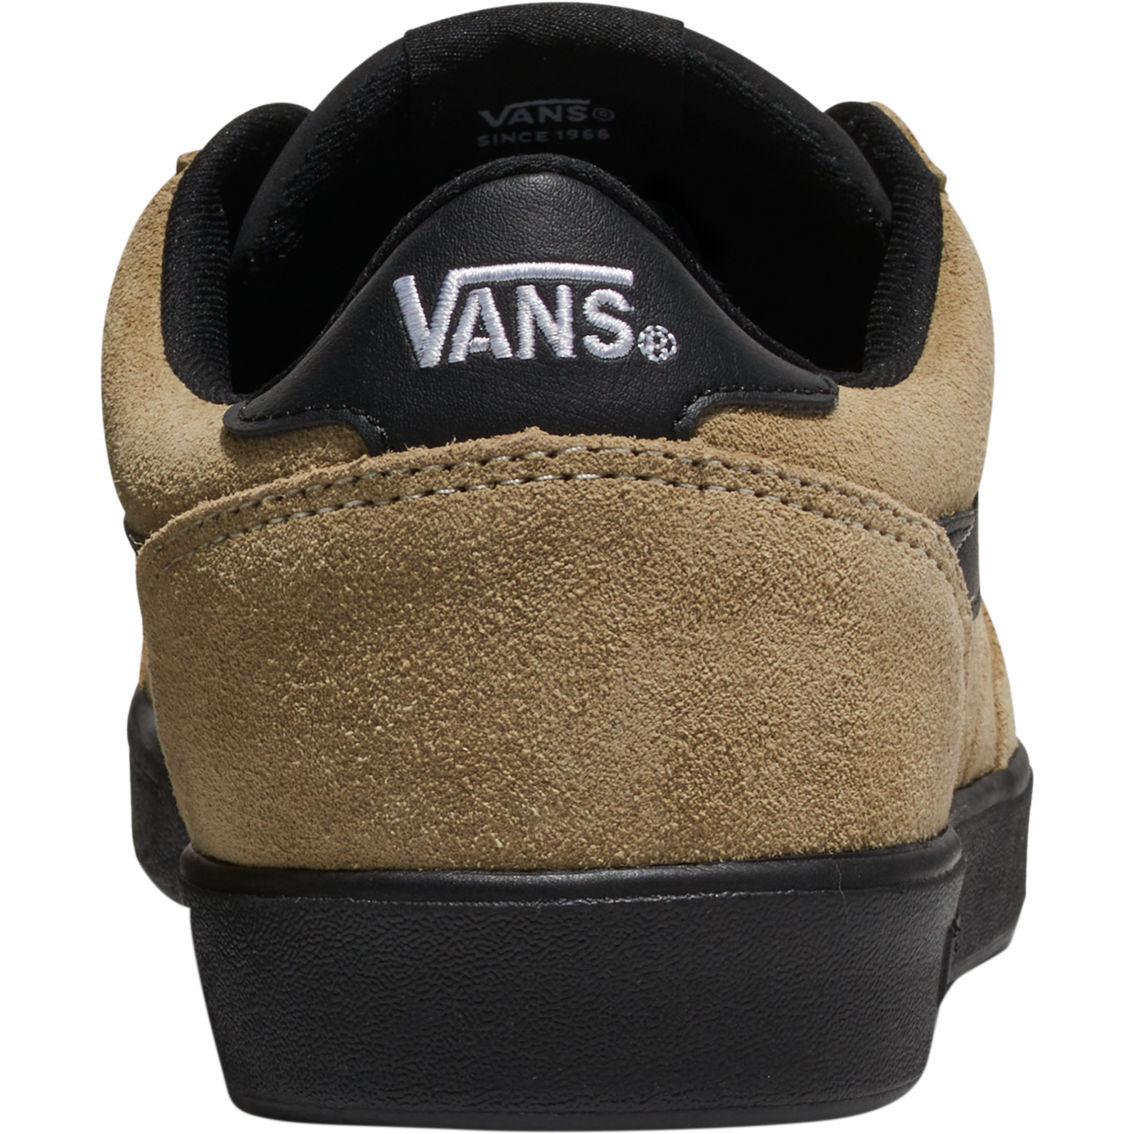 Vans Men's Cruze Too ComfyCush Black Outsole Shoes - Image 4 of 5